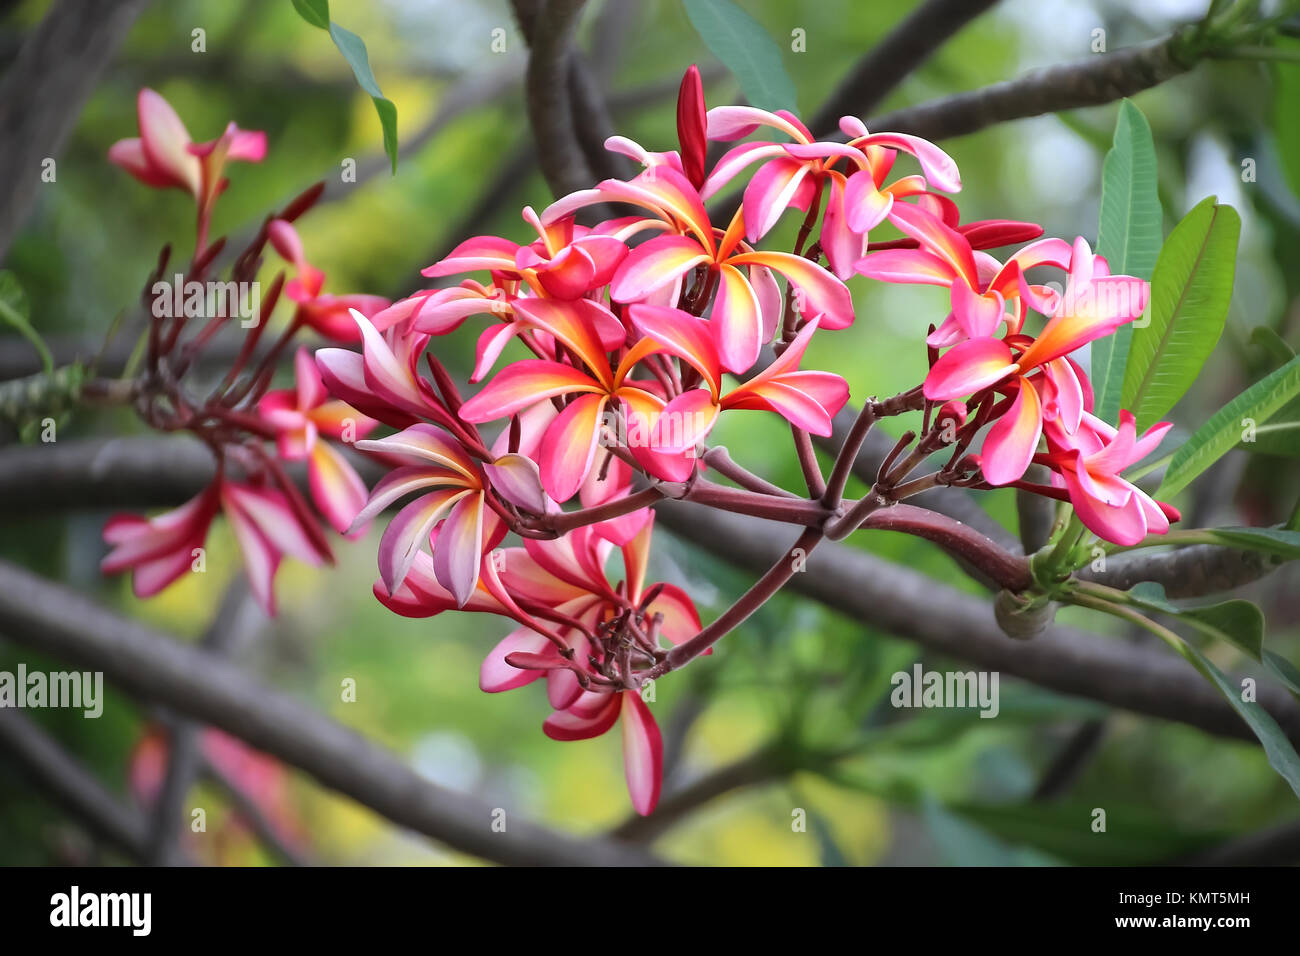 Beautiful red flower bush, Plumeria or Frangipani flower on tree Stock Photo